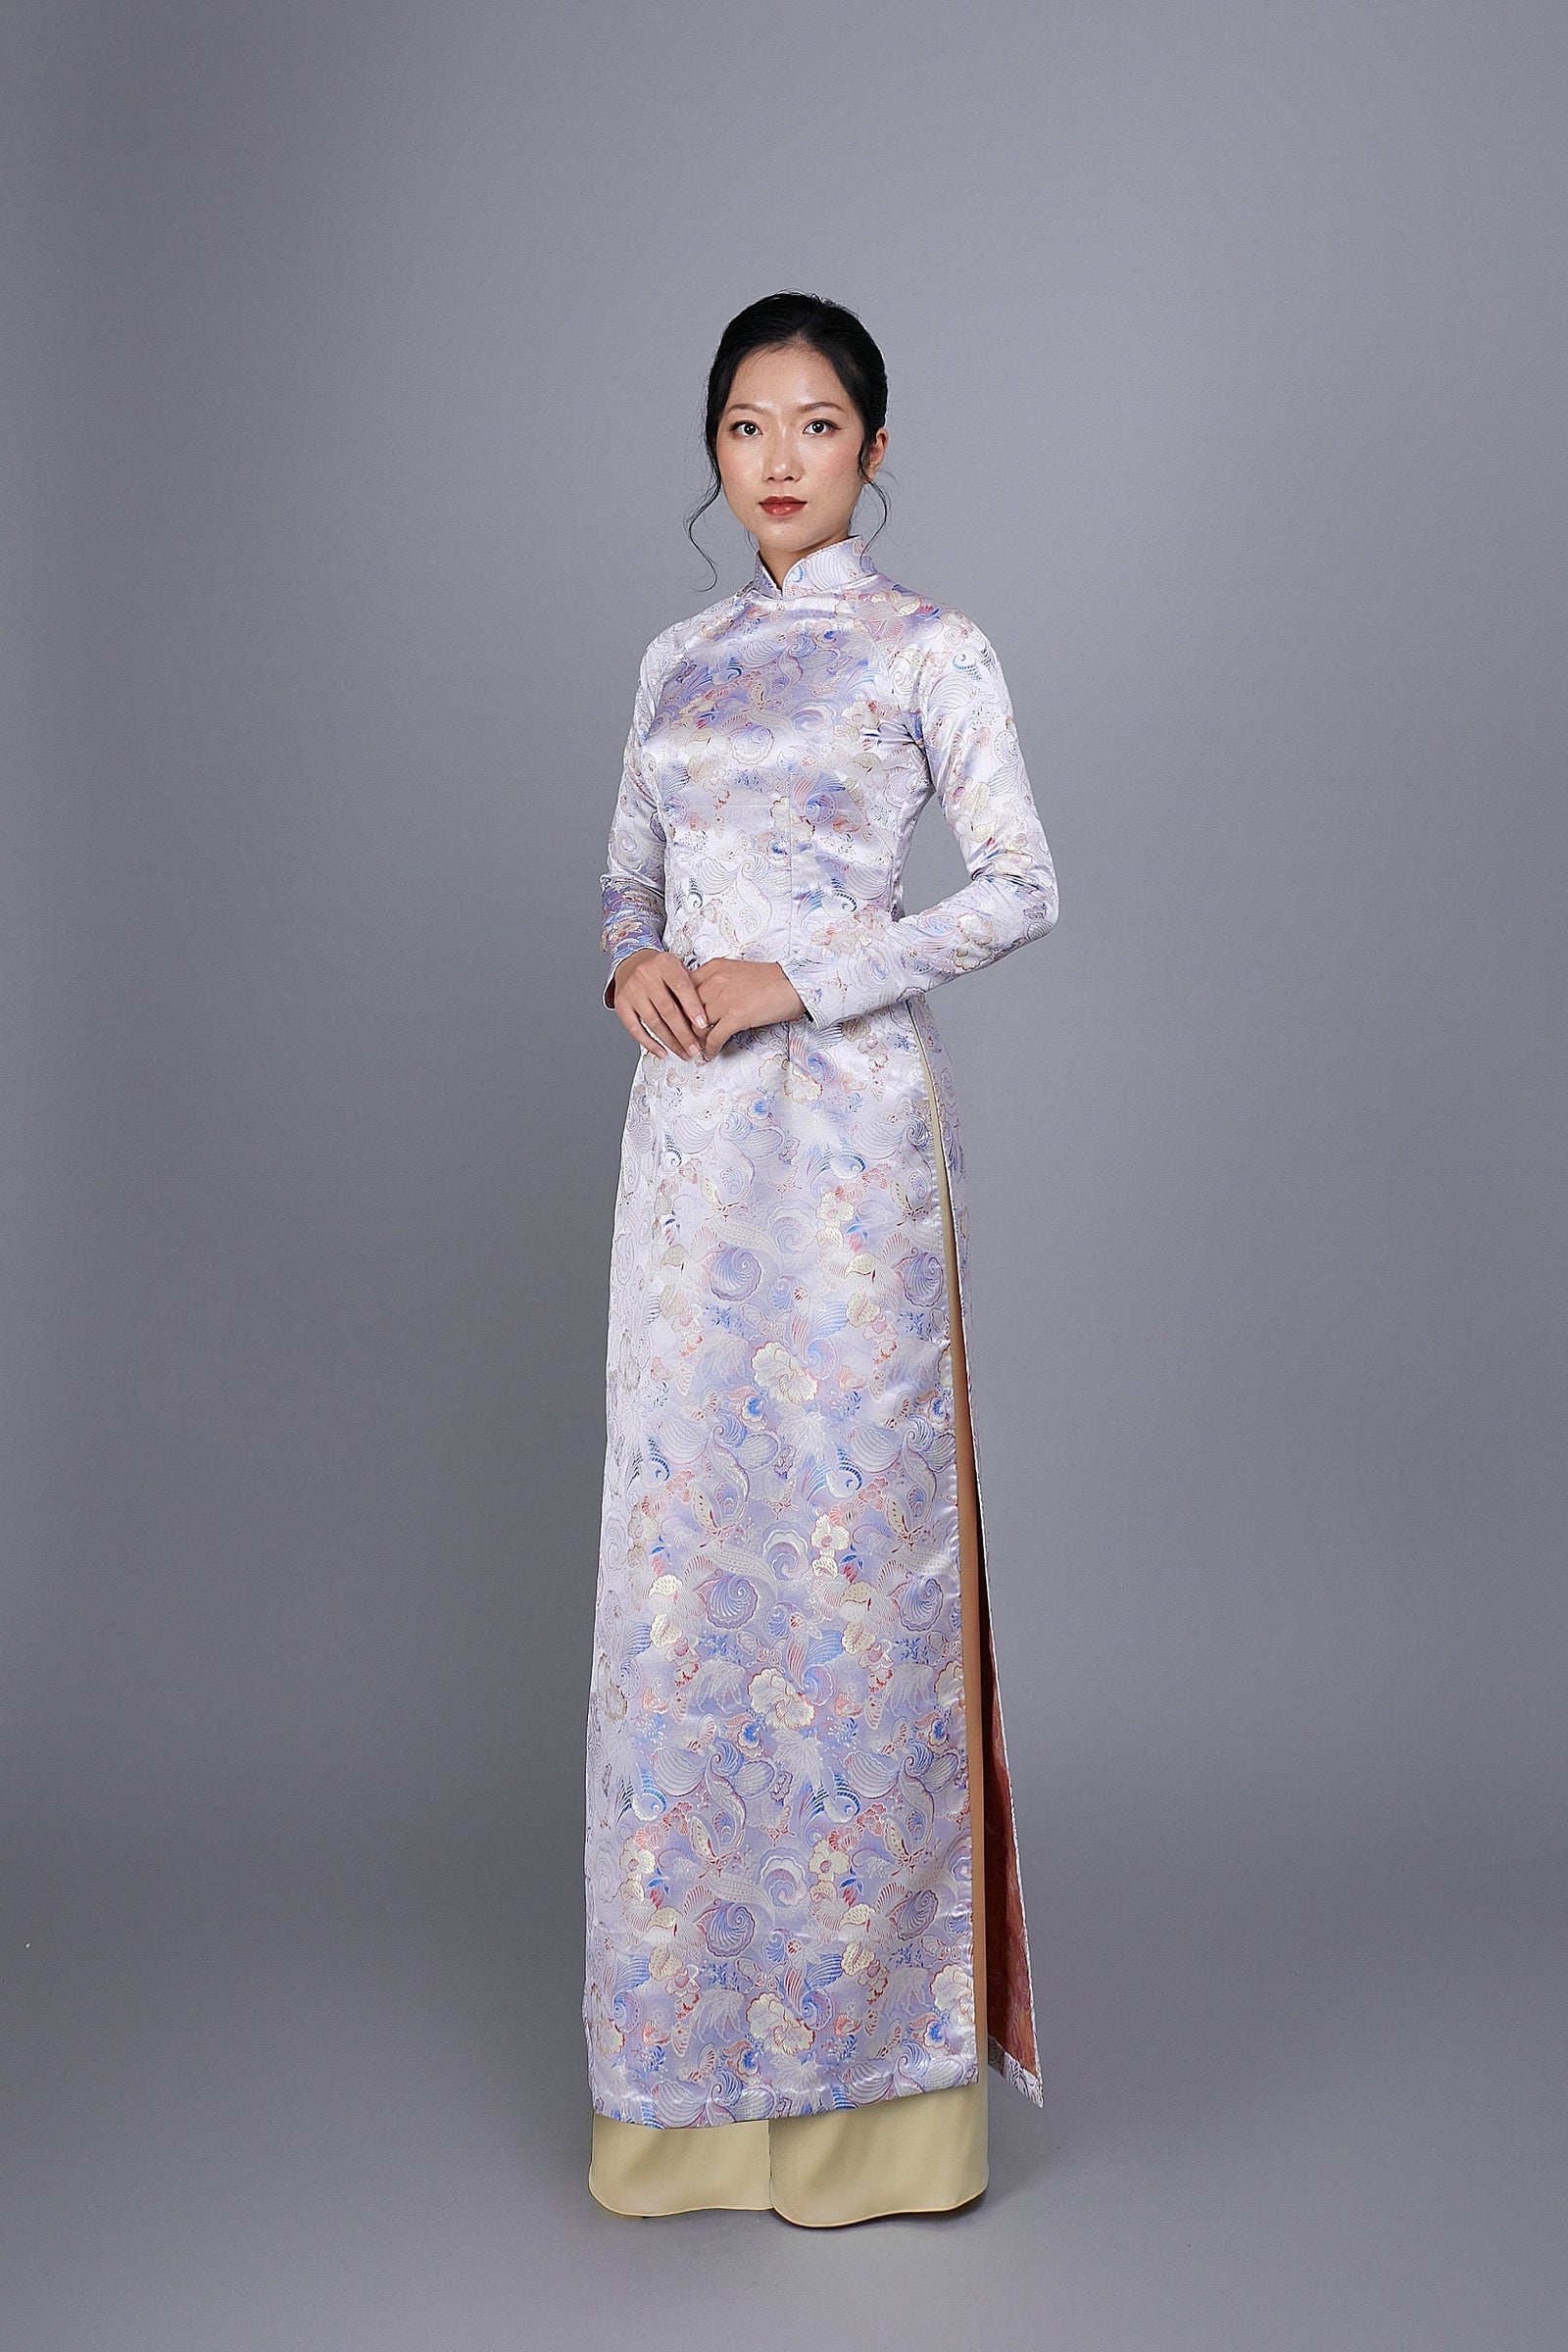 AO DAI - Traditional Dress of Vietnamese Women Editorial Photography -  Image of girls, women: 52595397